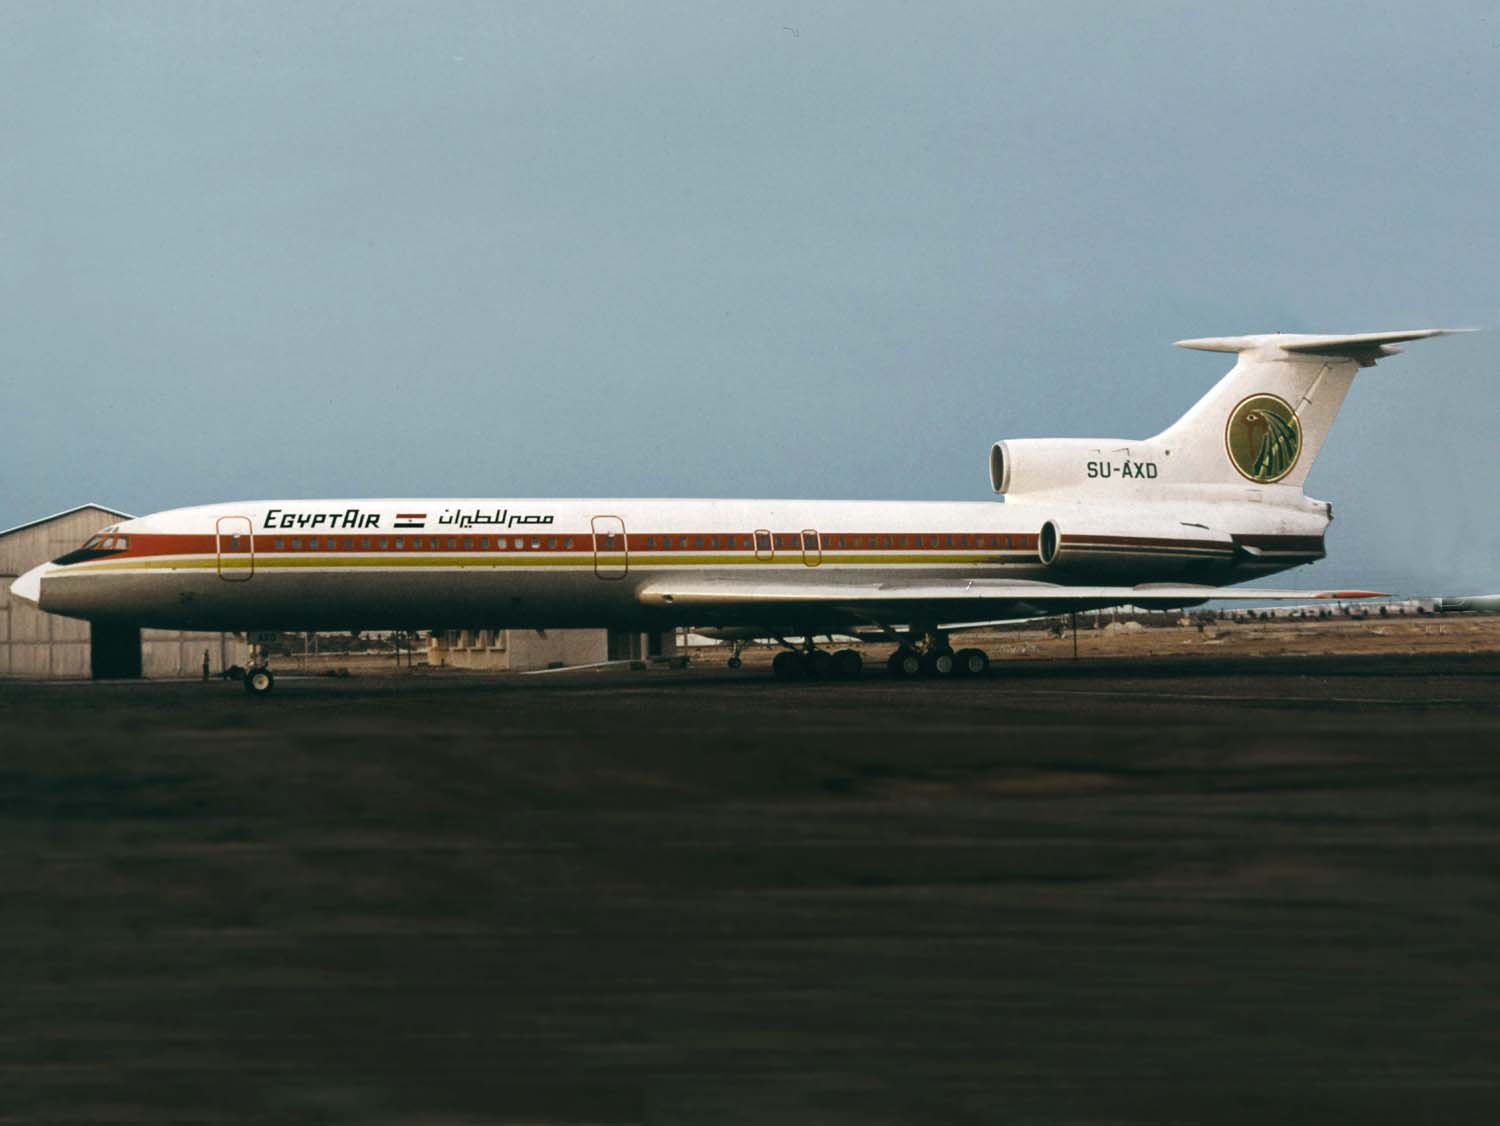 [TU-154+EGIPTAIR+SU-AXD.jpg]